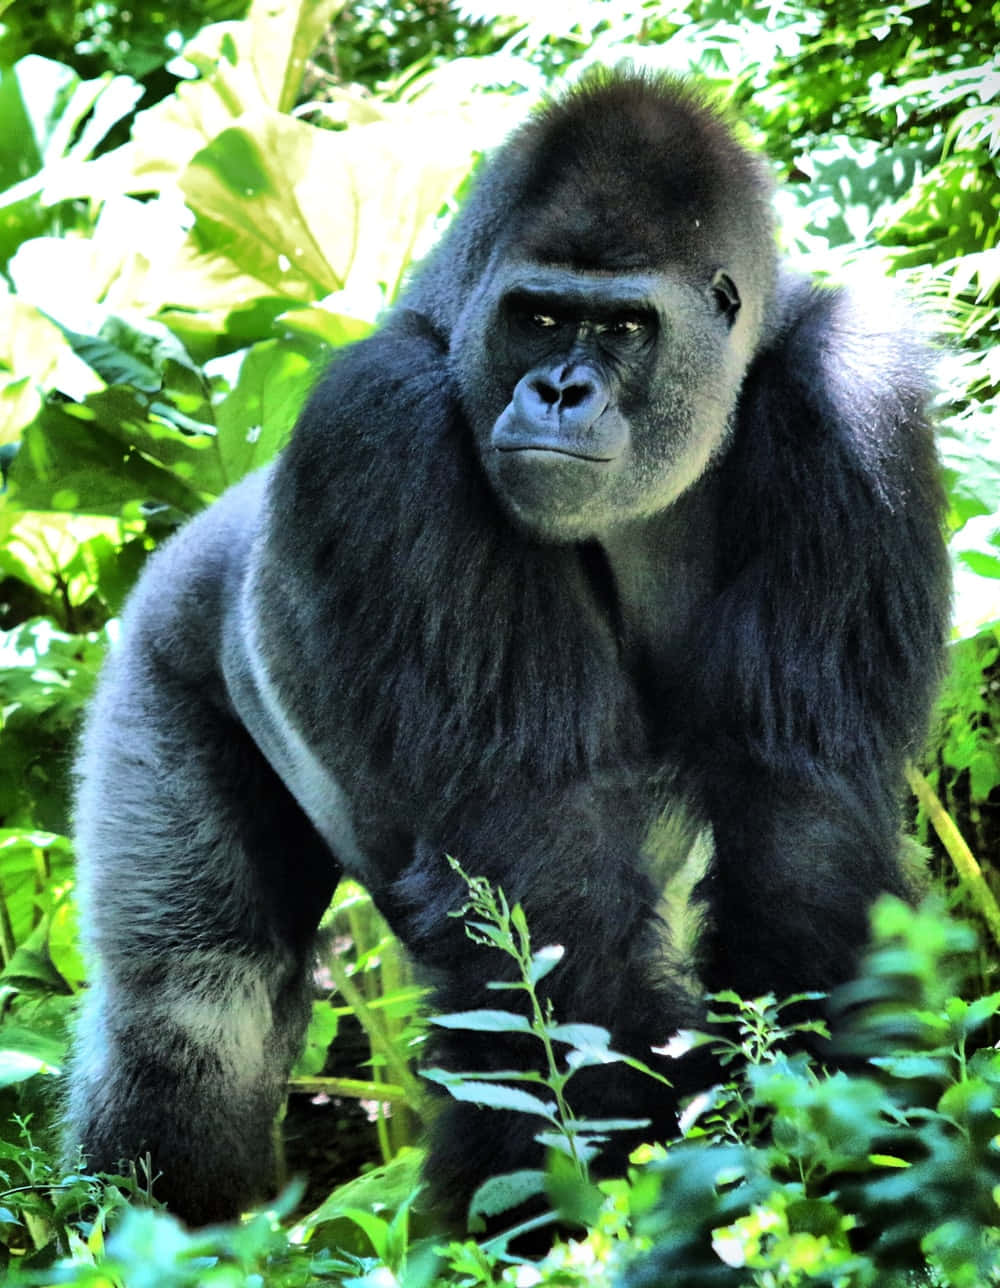 Sjove Gorilla billeder i skoven